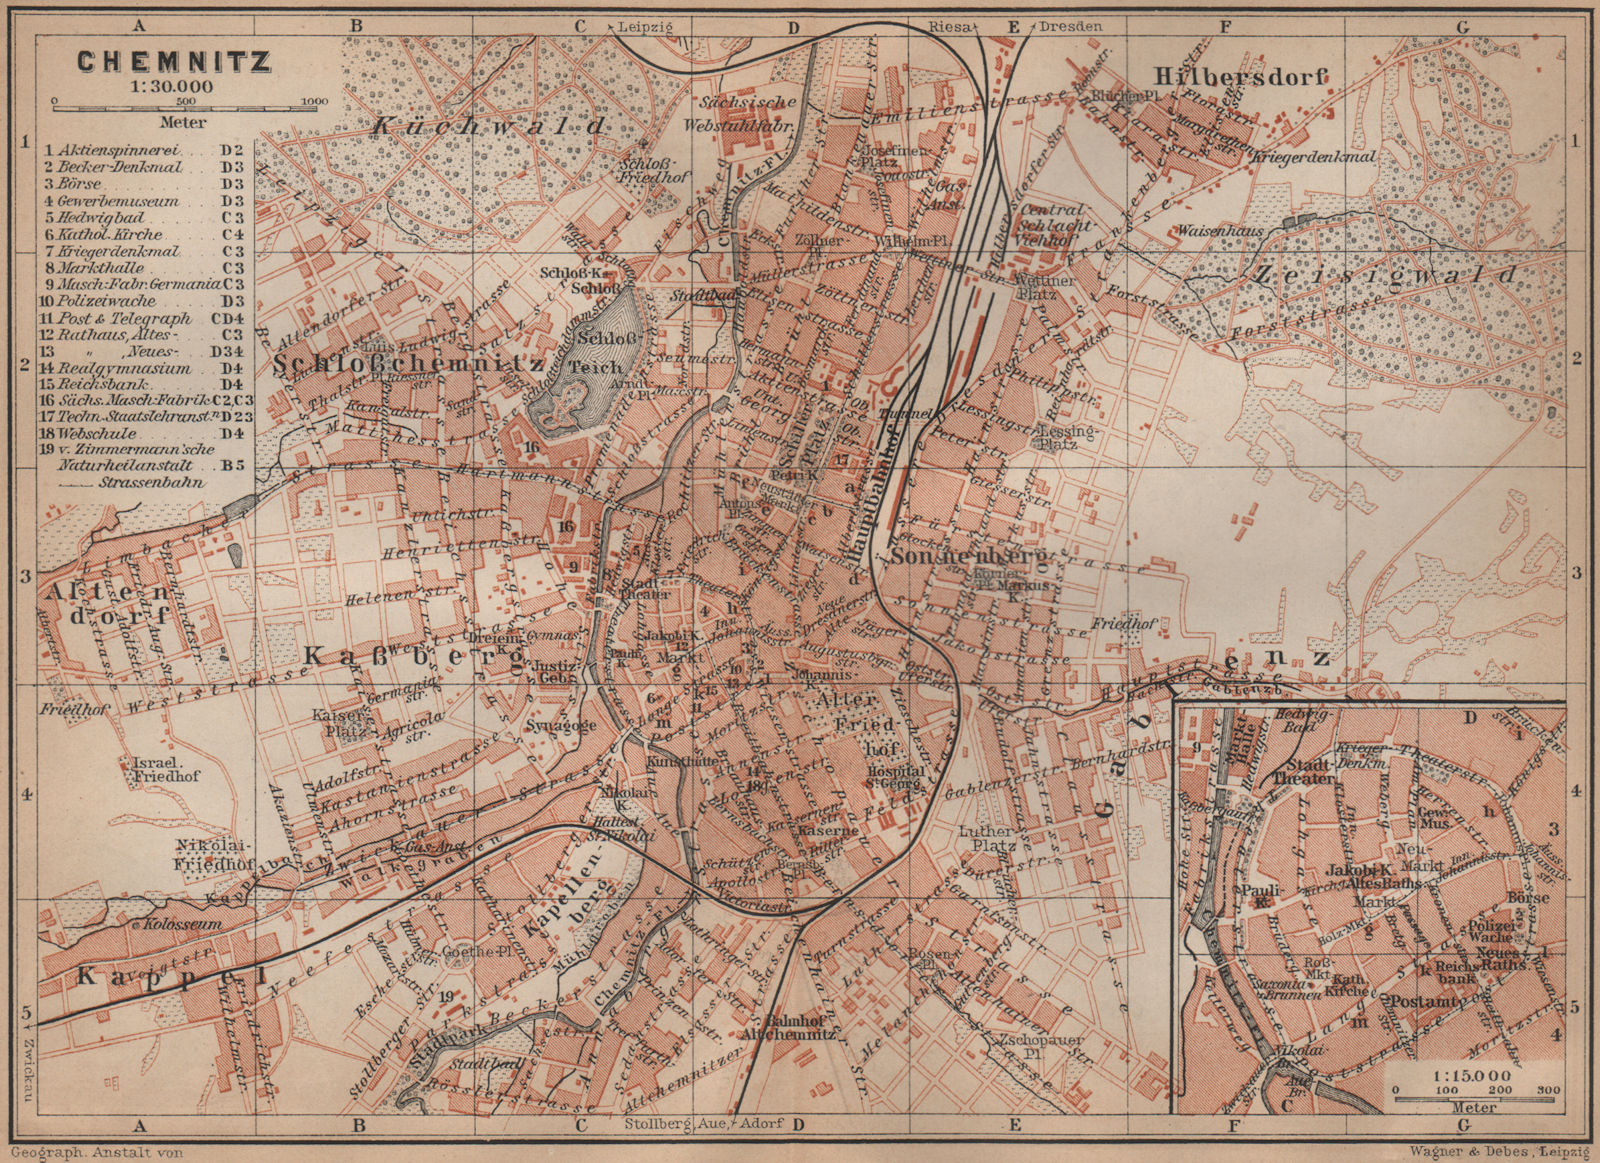 Associate Product CHEMNITZ antique town city stadtplan. Saxony karte. BAEDEKER 1900 old map